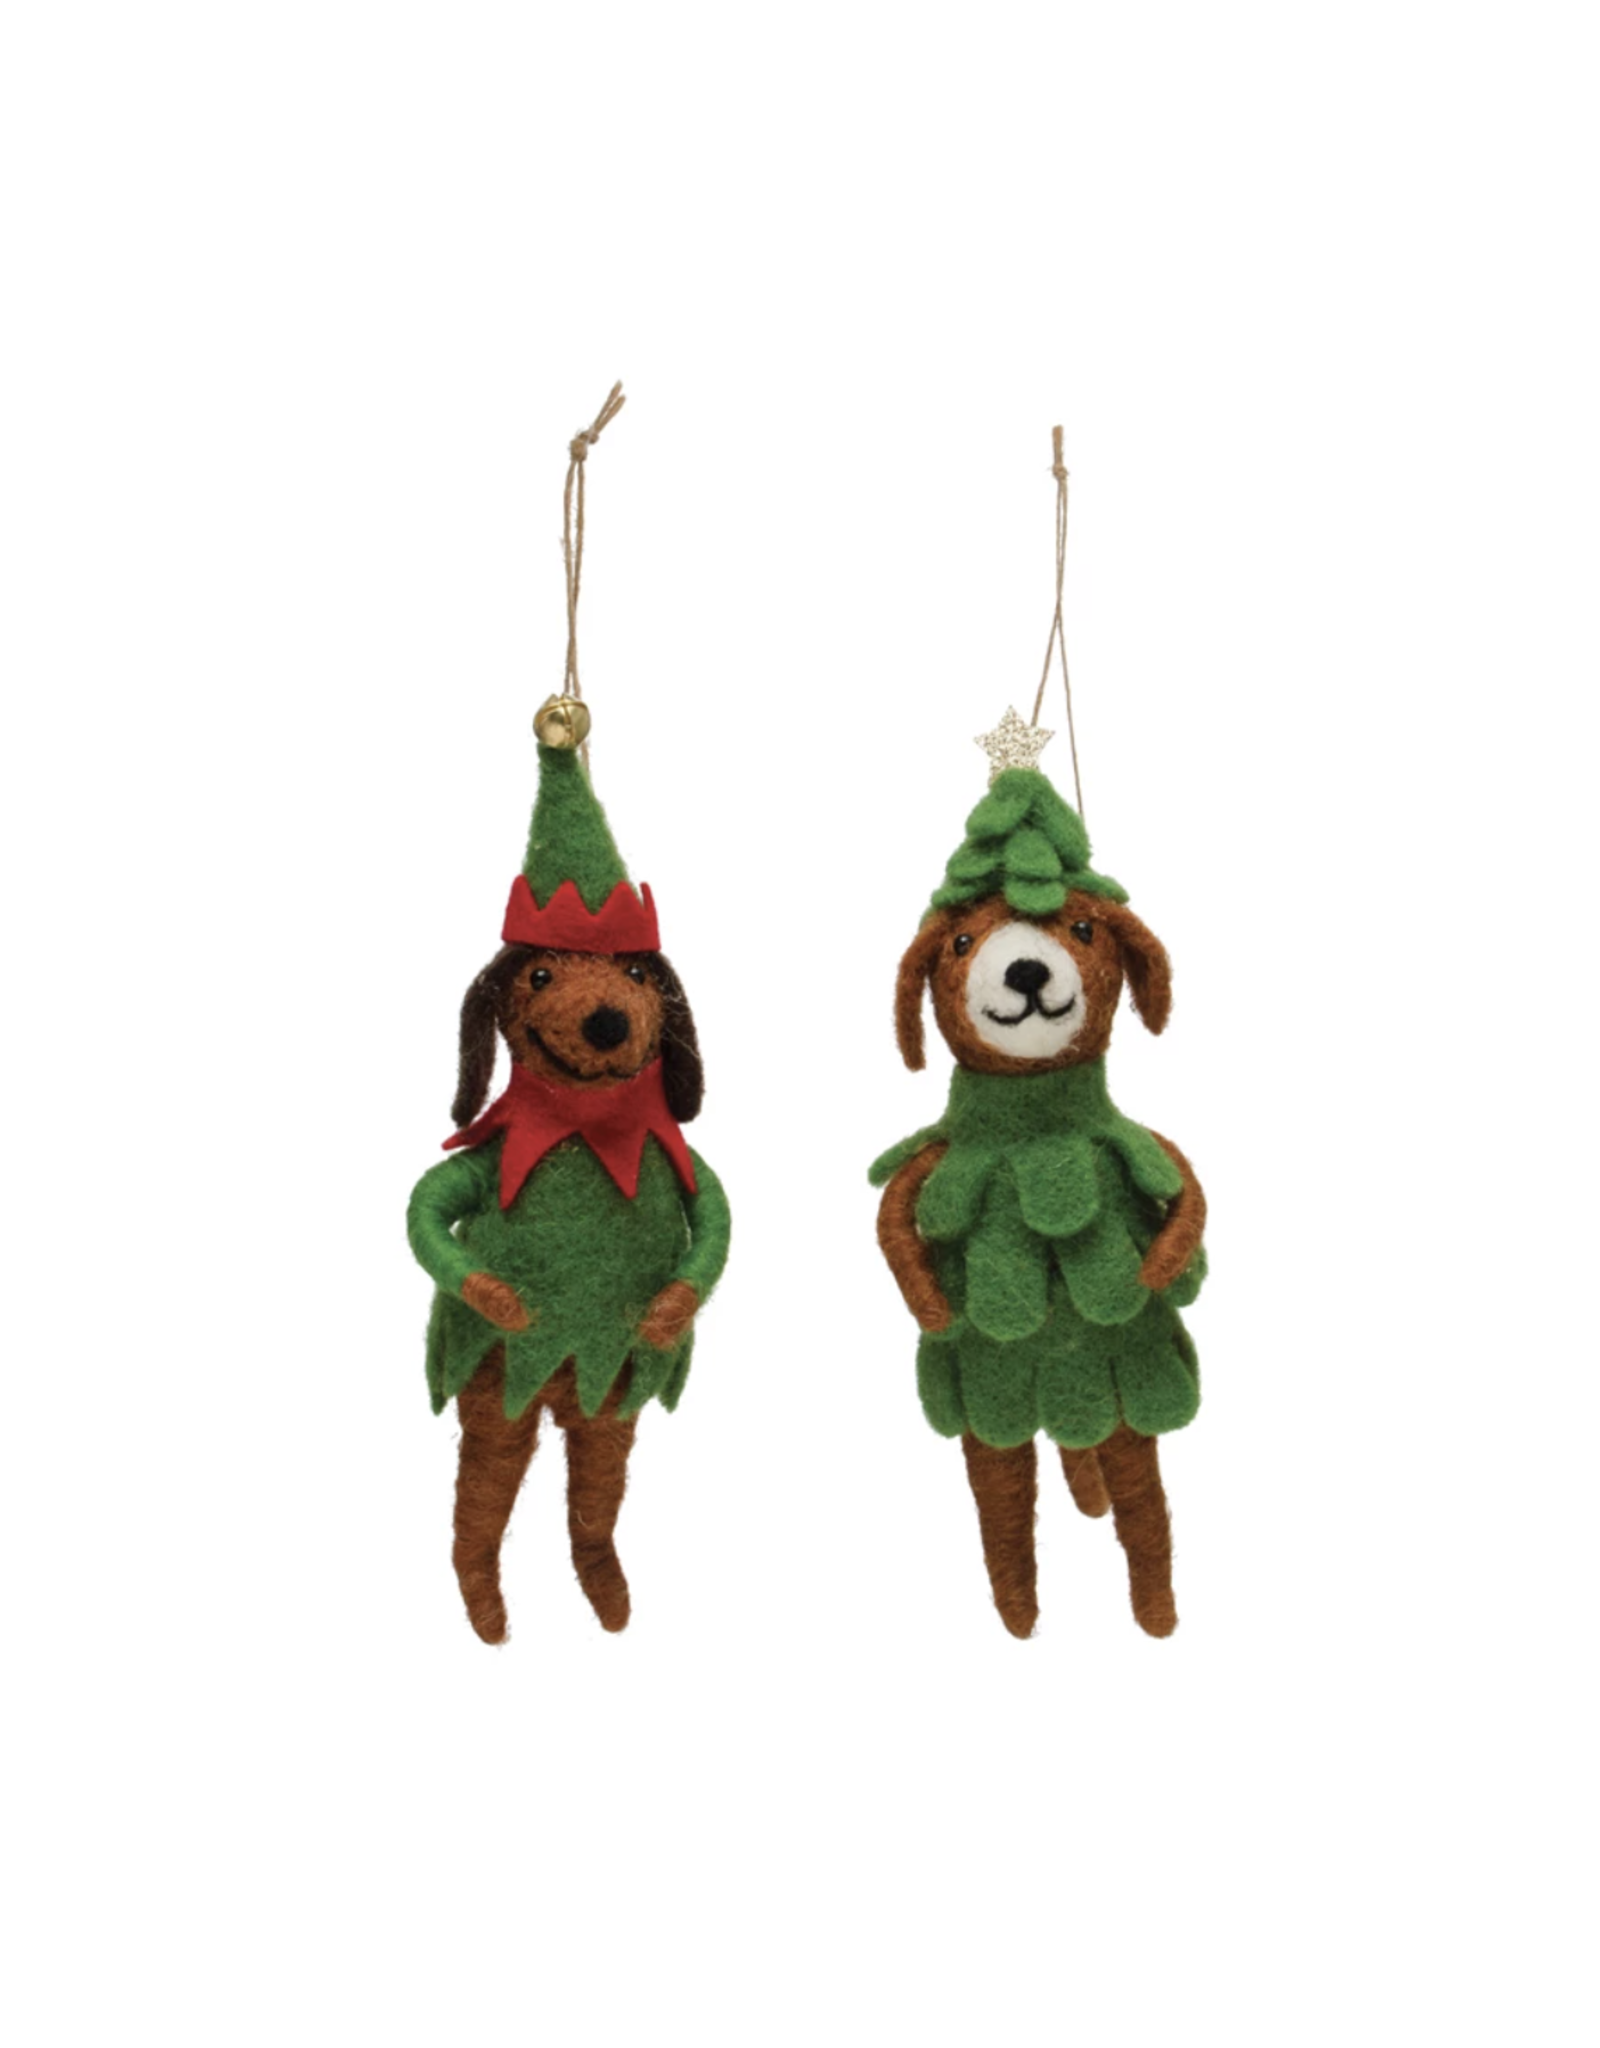 Wool Felt Dog Ornament in Tree/Elf Outfits